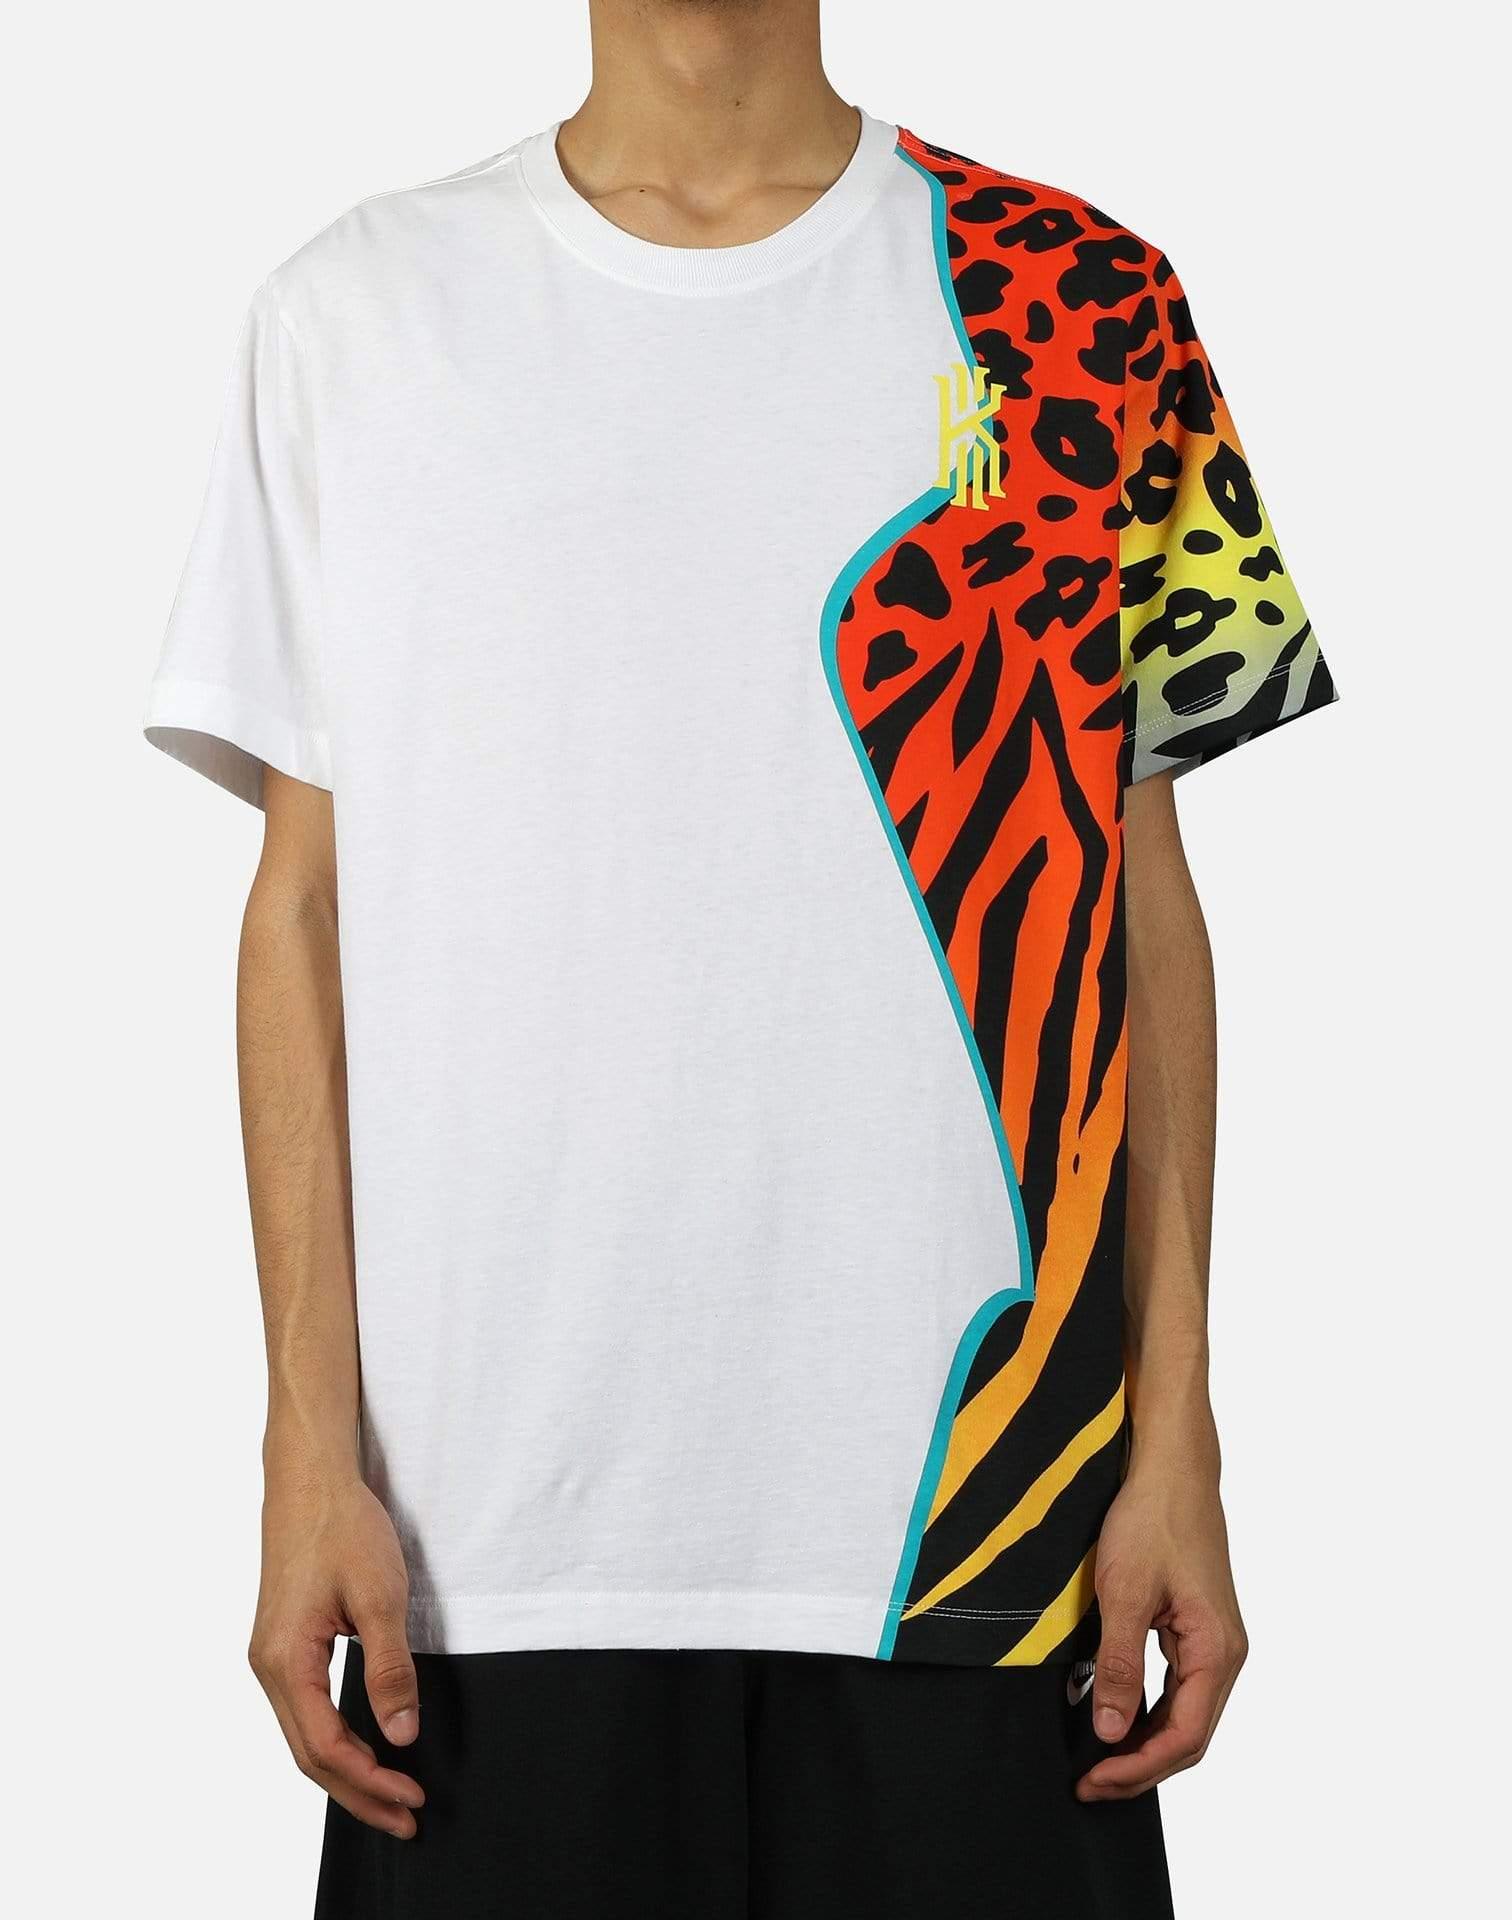 kyrie animal print shirt